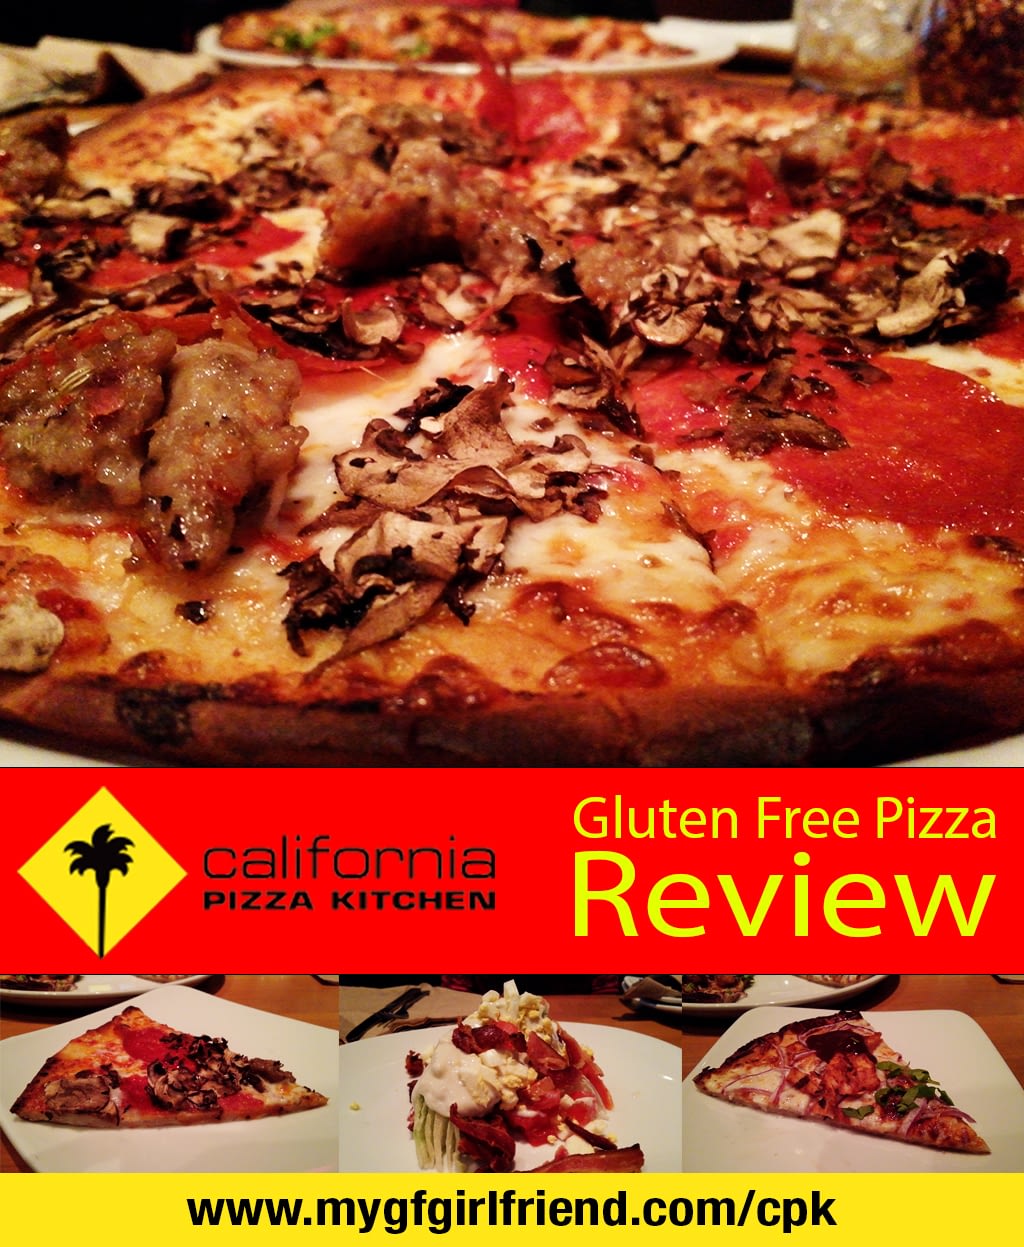 California Pizza Kitchen Gluten Free Pizza Review | My Gluten Free